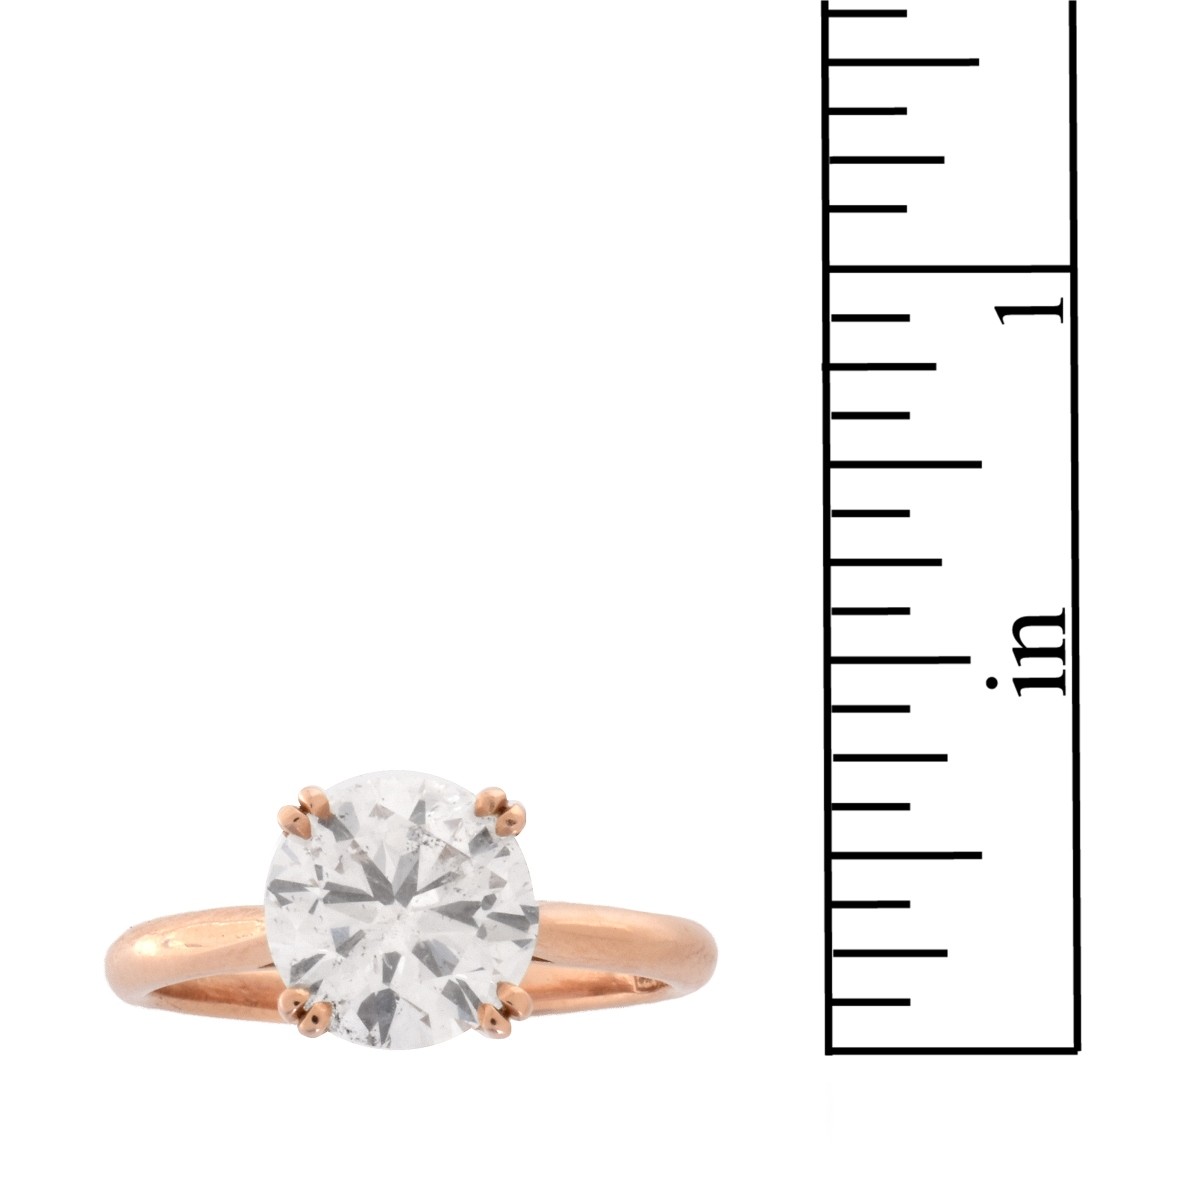 2.0 Carat Diamond and 18K Ring